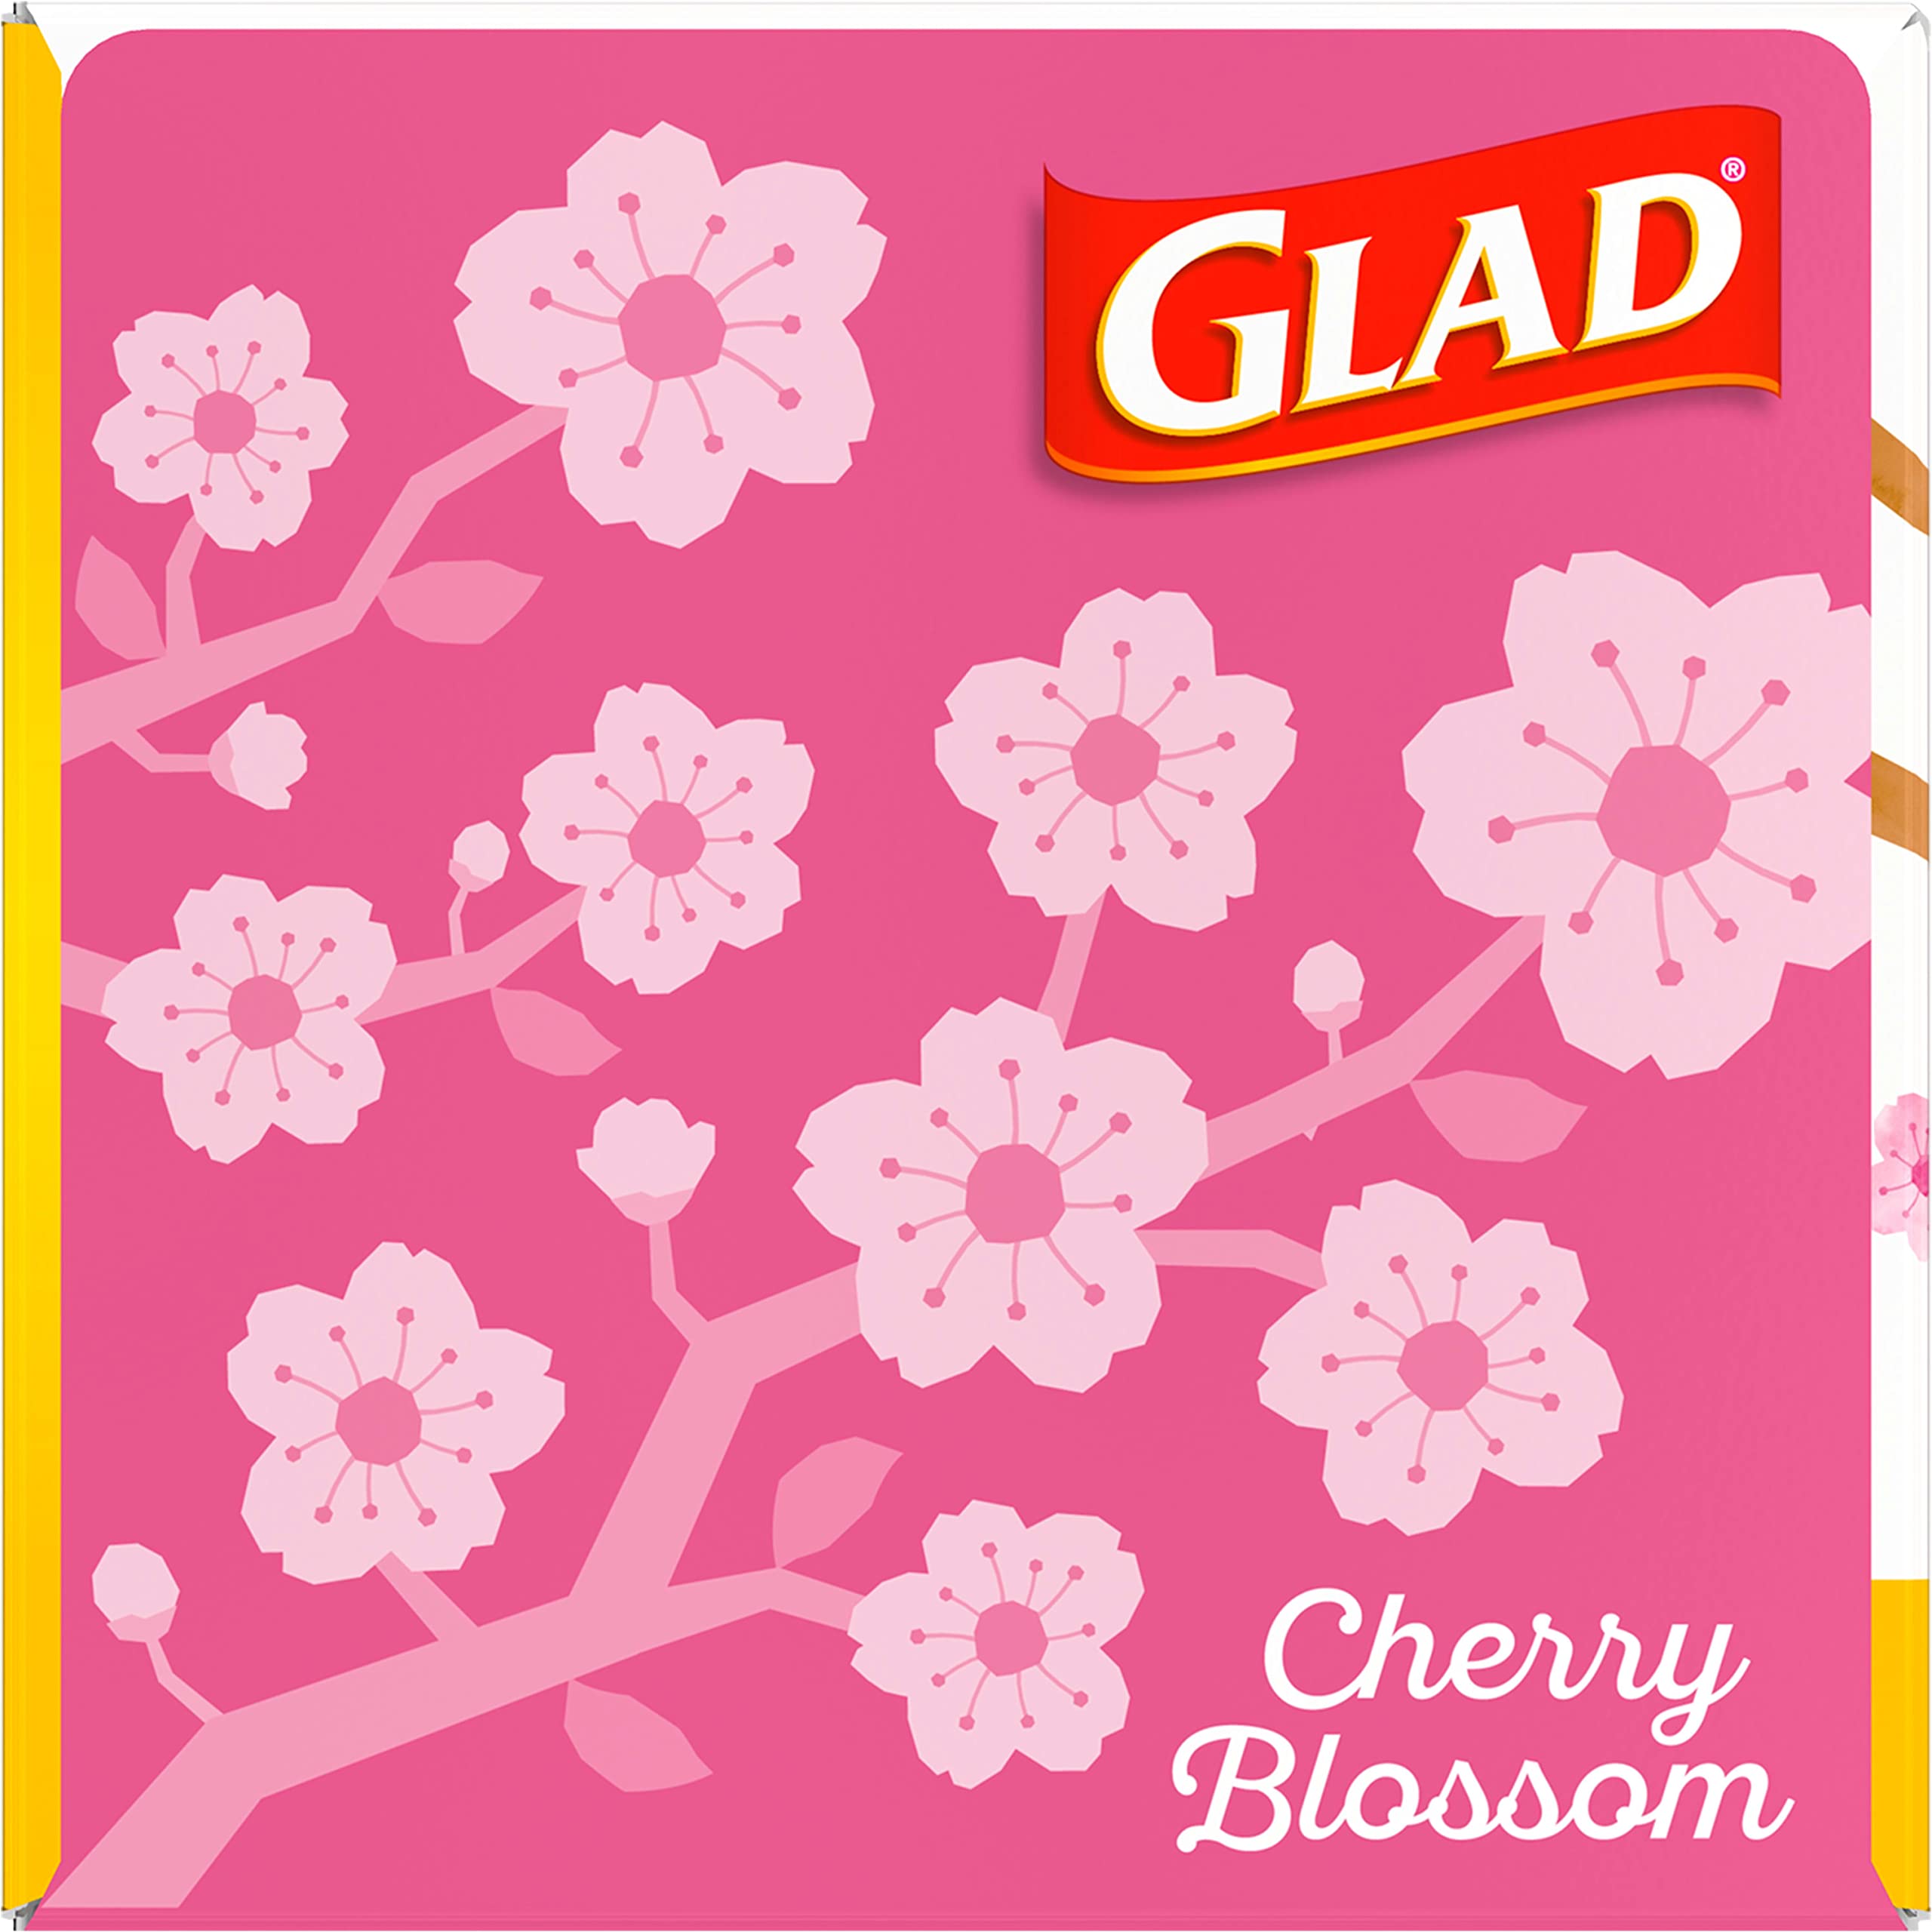 Glad Drawstring Cherry Blossom Odor Shield Small 4 Gallon 30/80ct